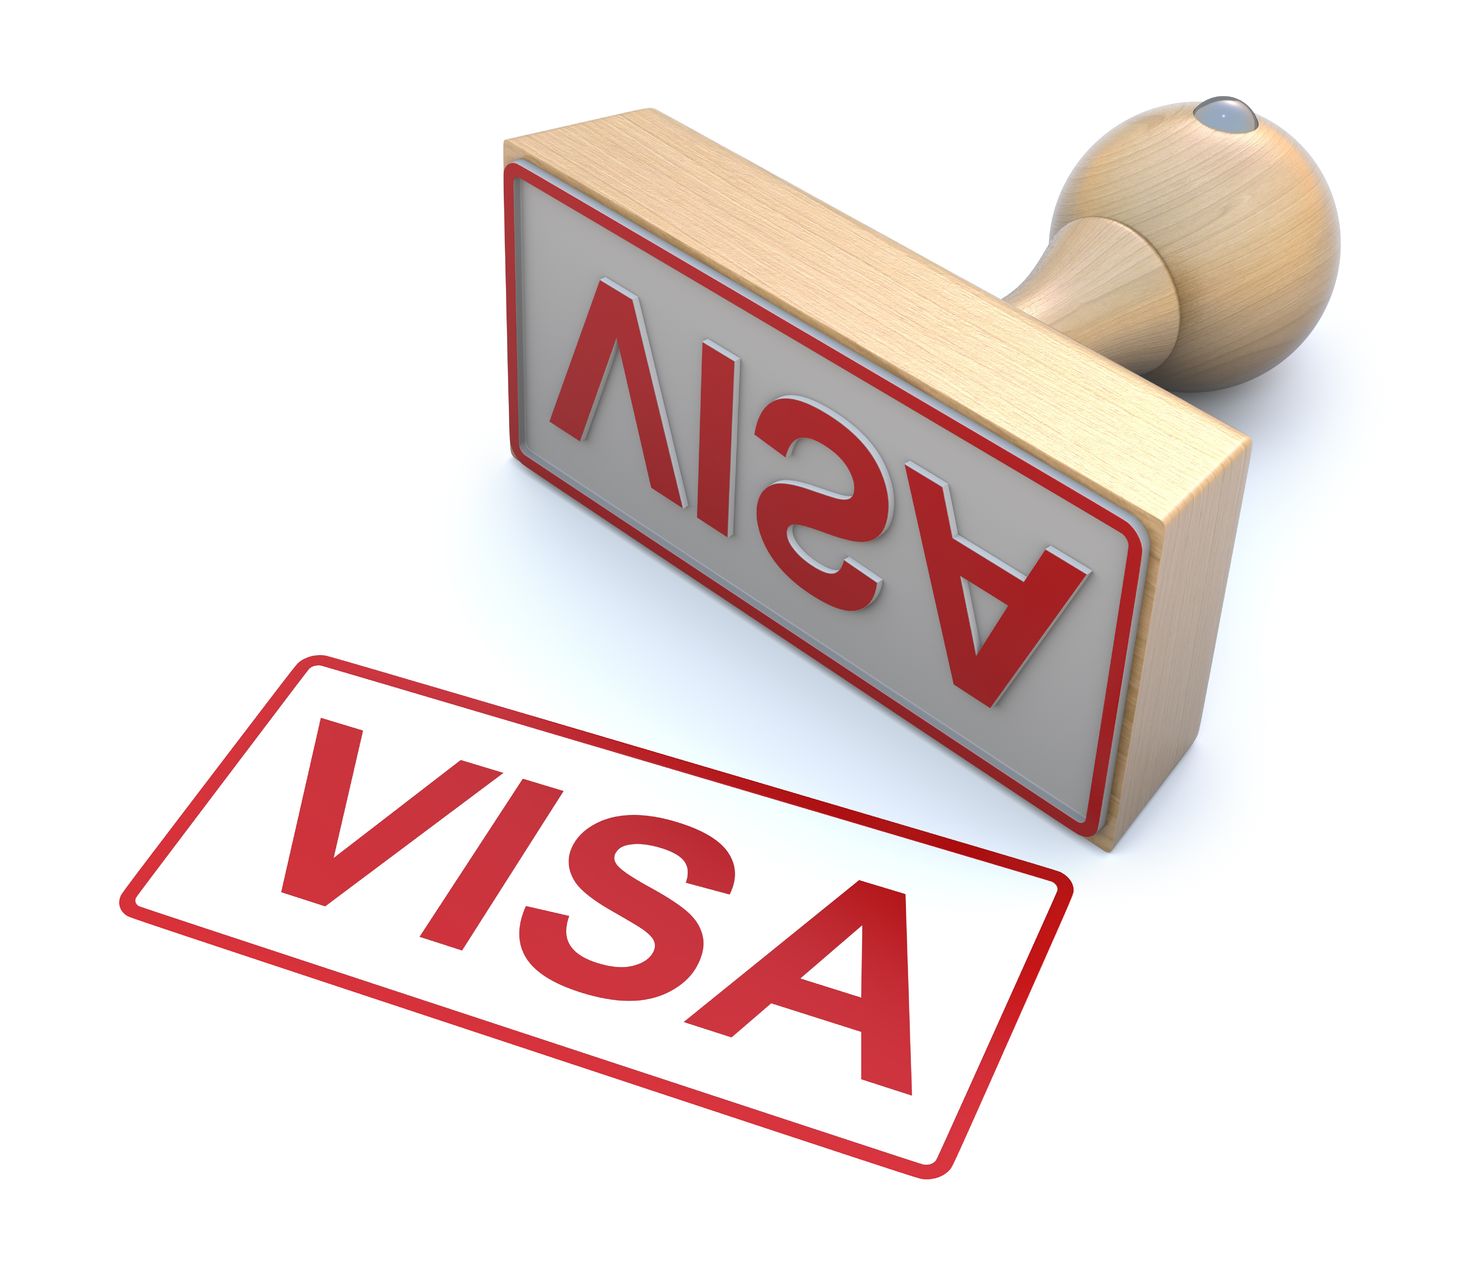 10831740 - rubber stamp - visa